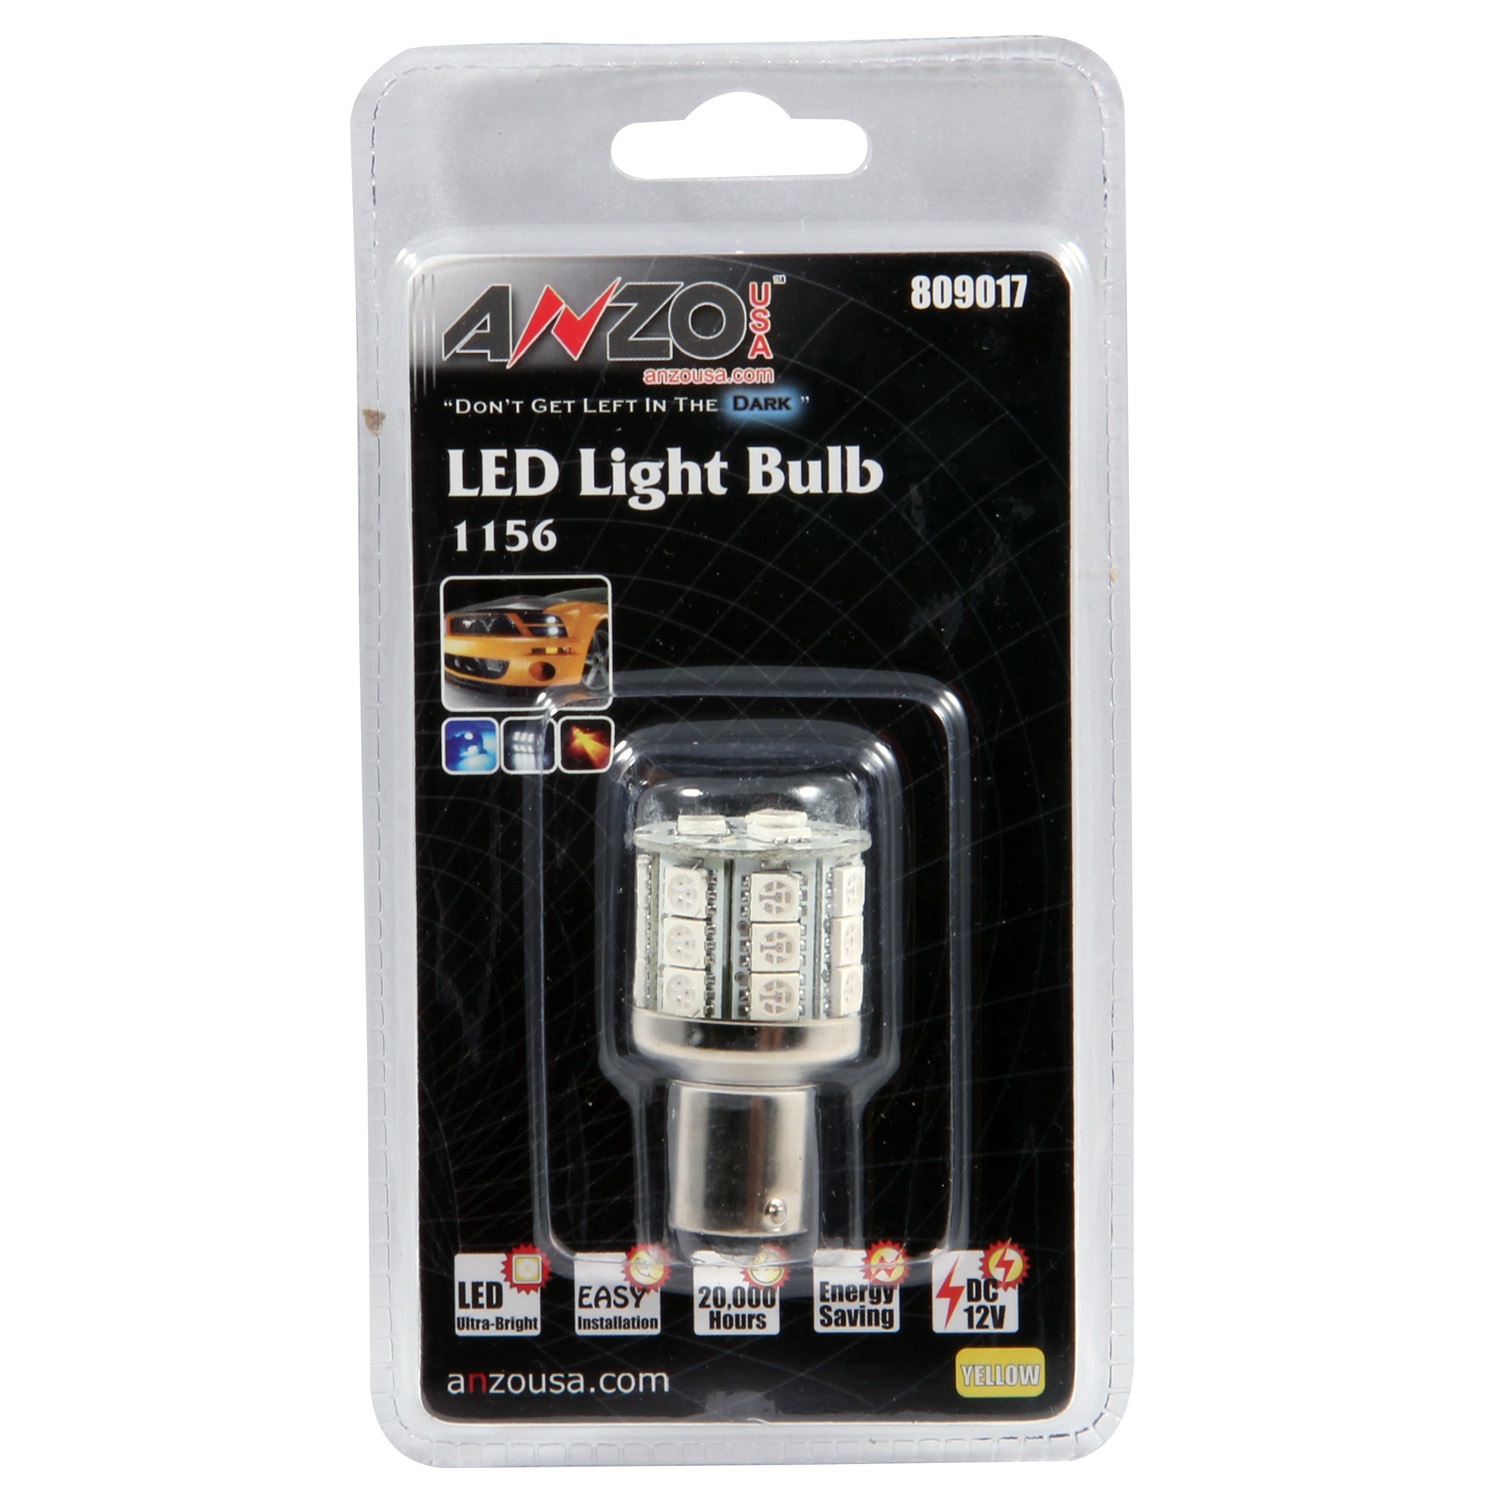 Anzo USA Anzo USA 809017 LED Replacement Bulb